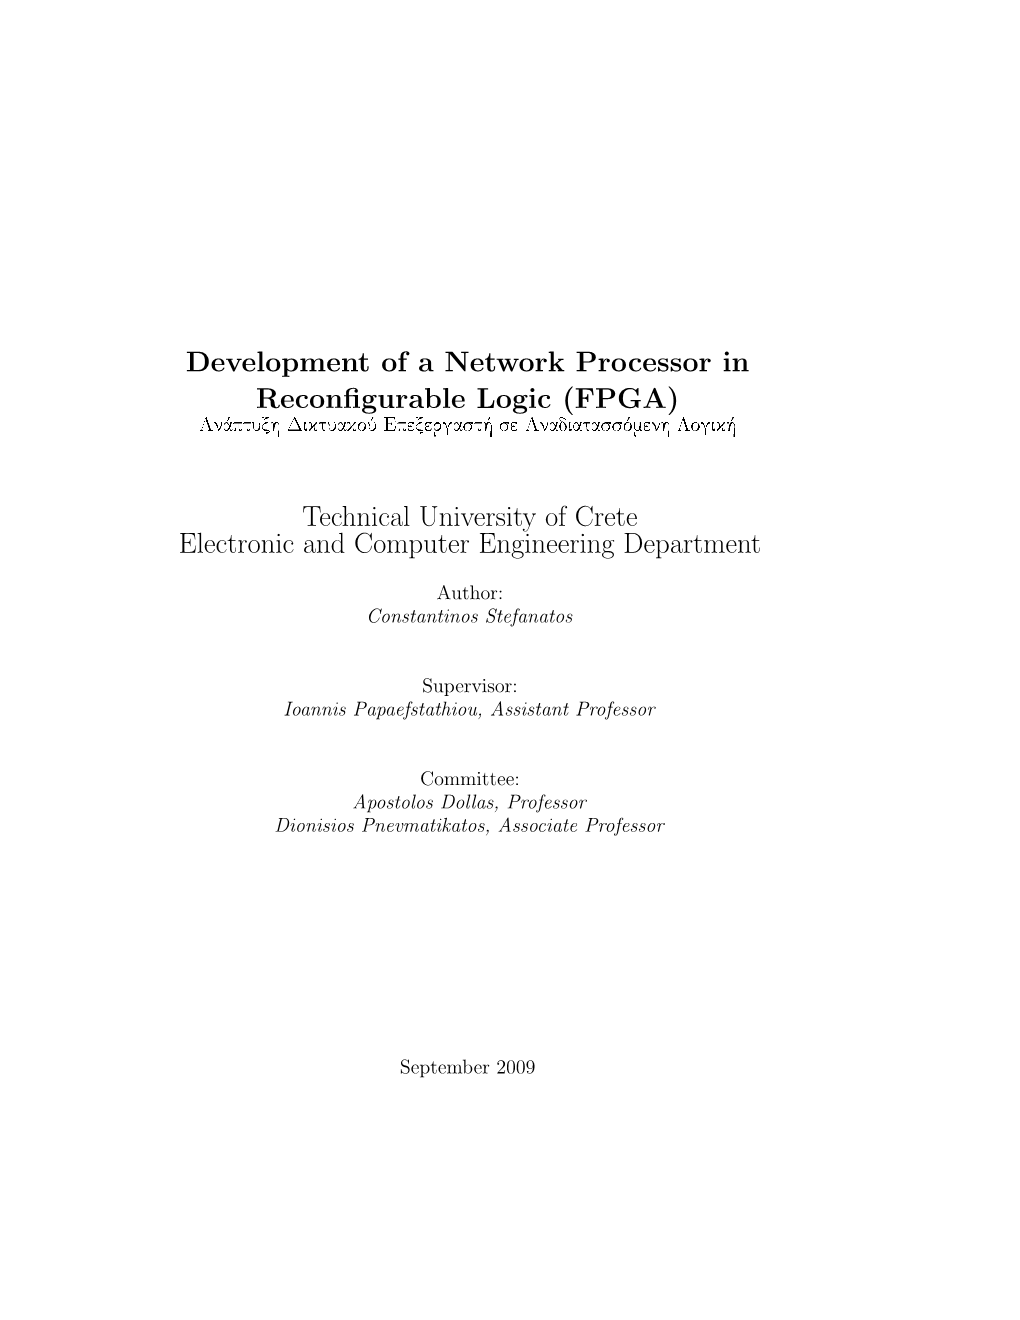 Development of a Network Processor in Reconfigurable Logic